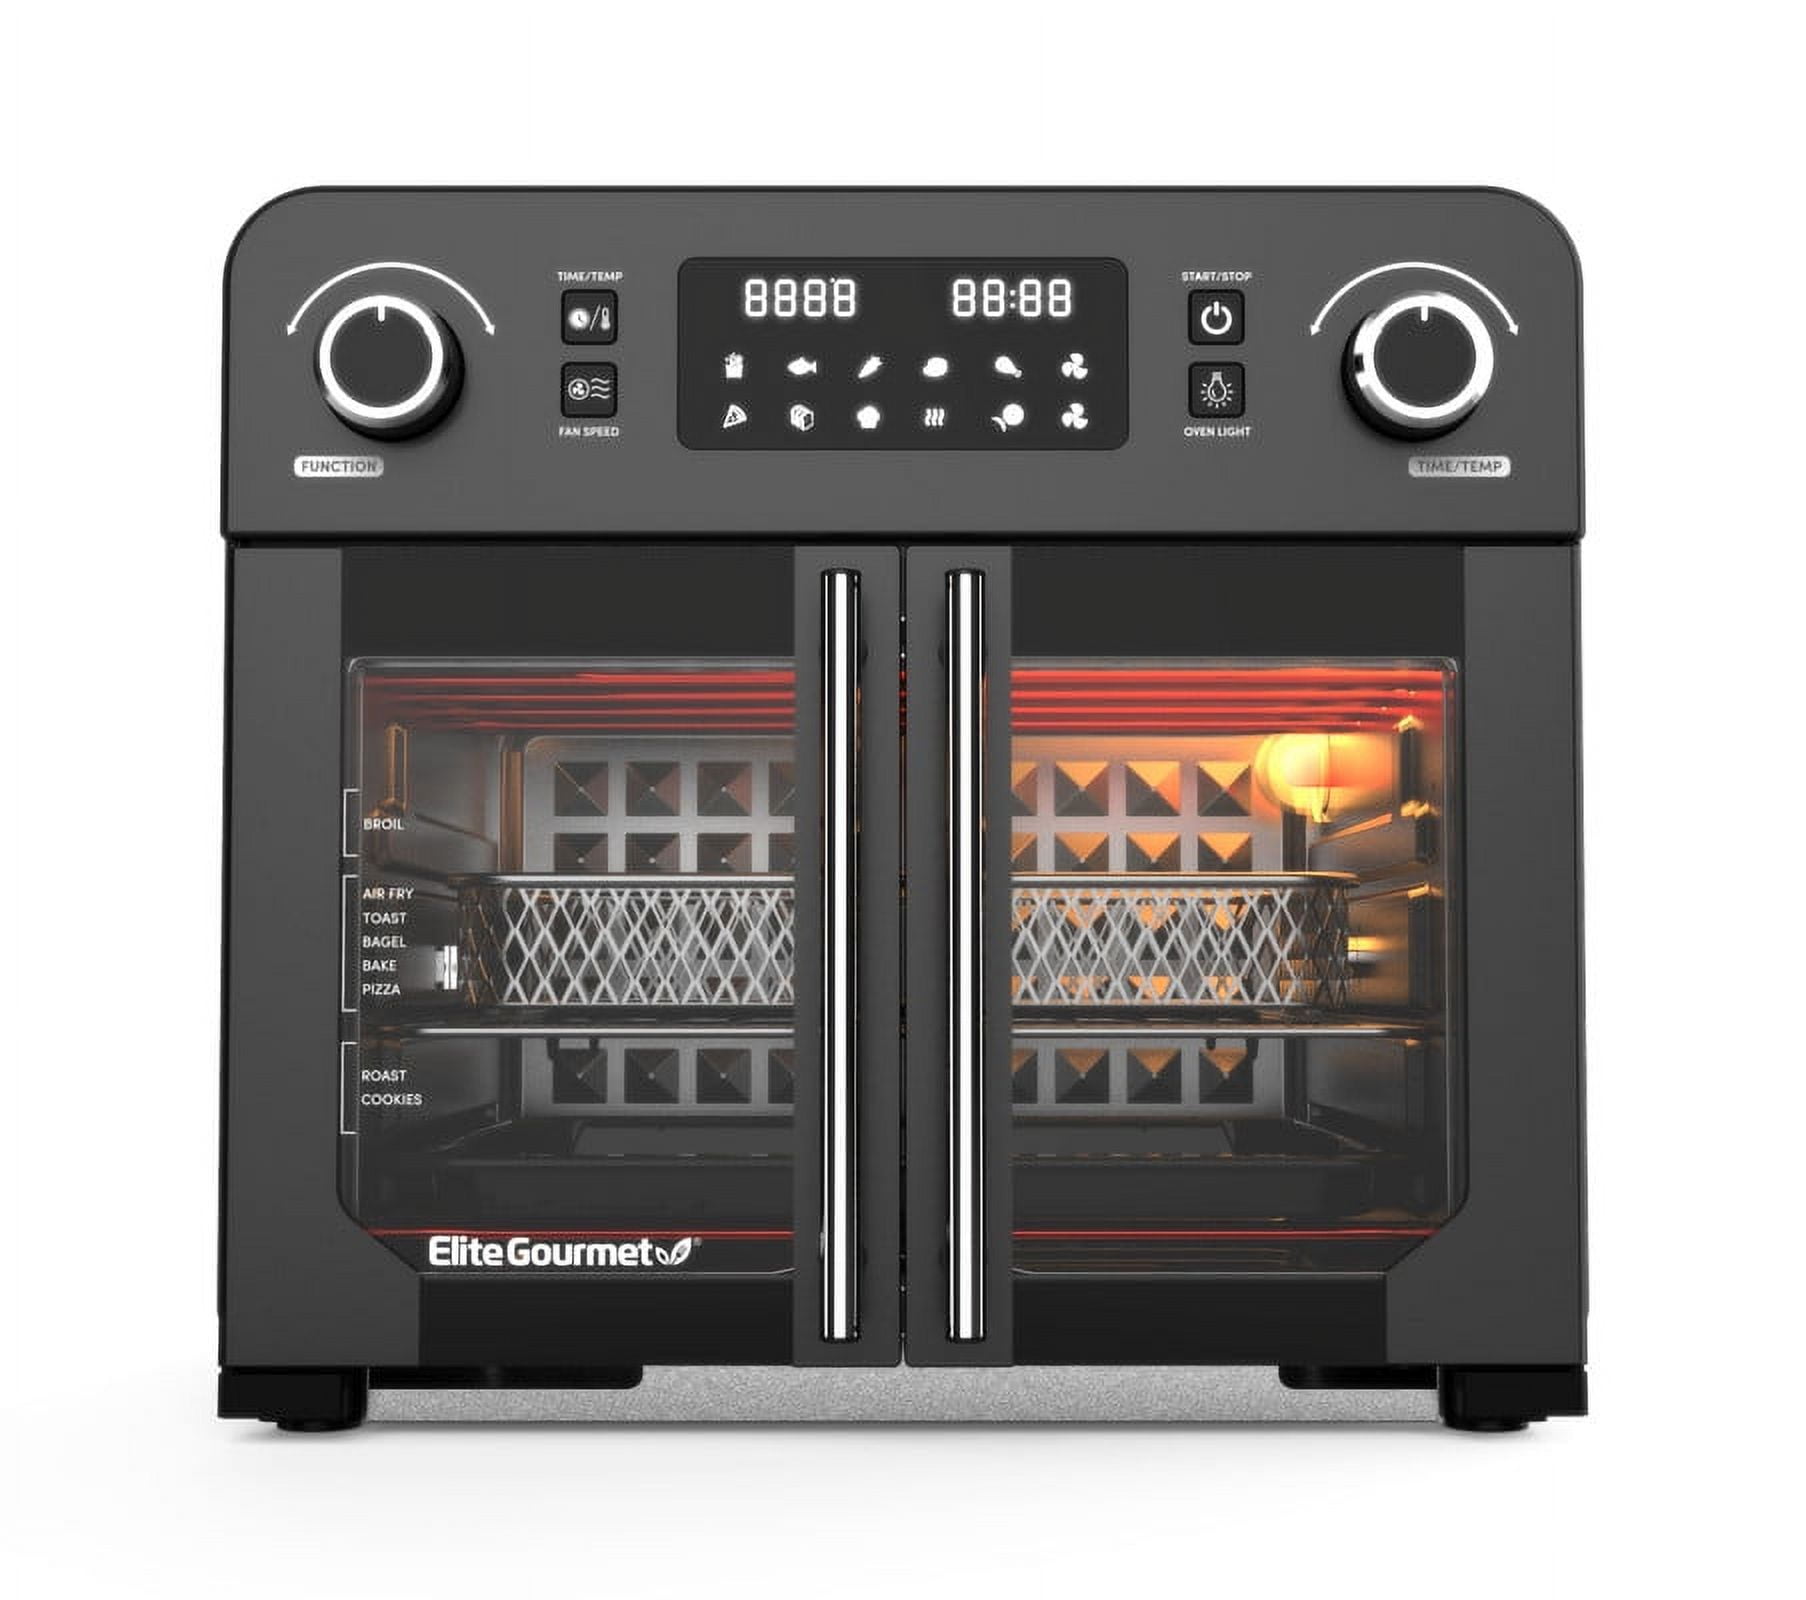 Kitchen Elite AFO23236SS 25qt French Door Air Fryer Oven / BrandsMart USA